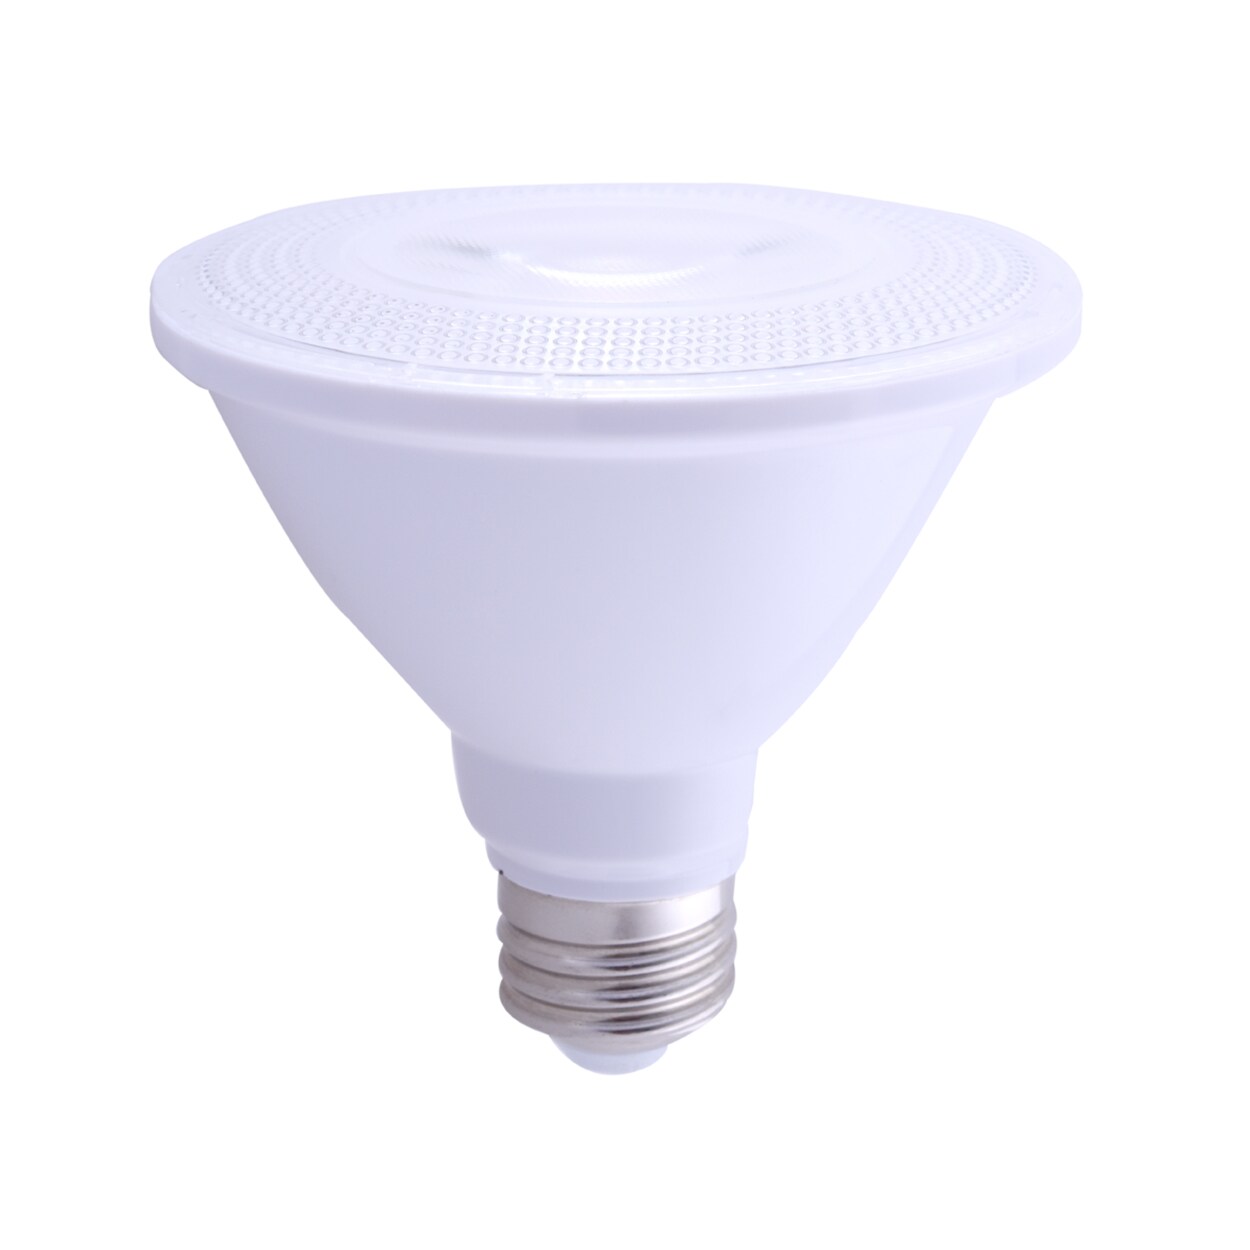 Simply Conserve Par 30 short neck 75-Watt EQ LED Par 30 Shortneck Bright White Dimmable Flood Light Bulb (24-Pack)